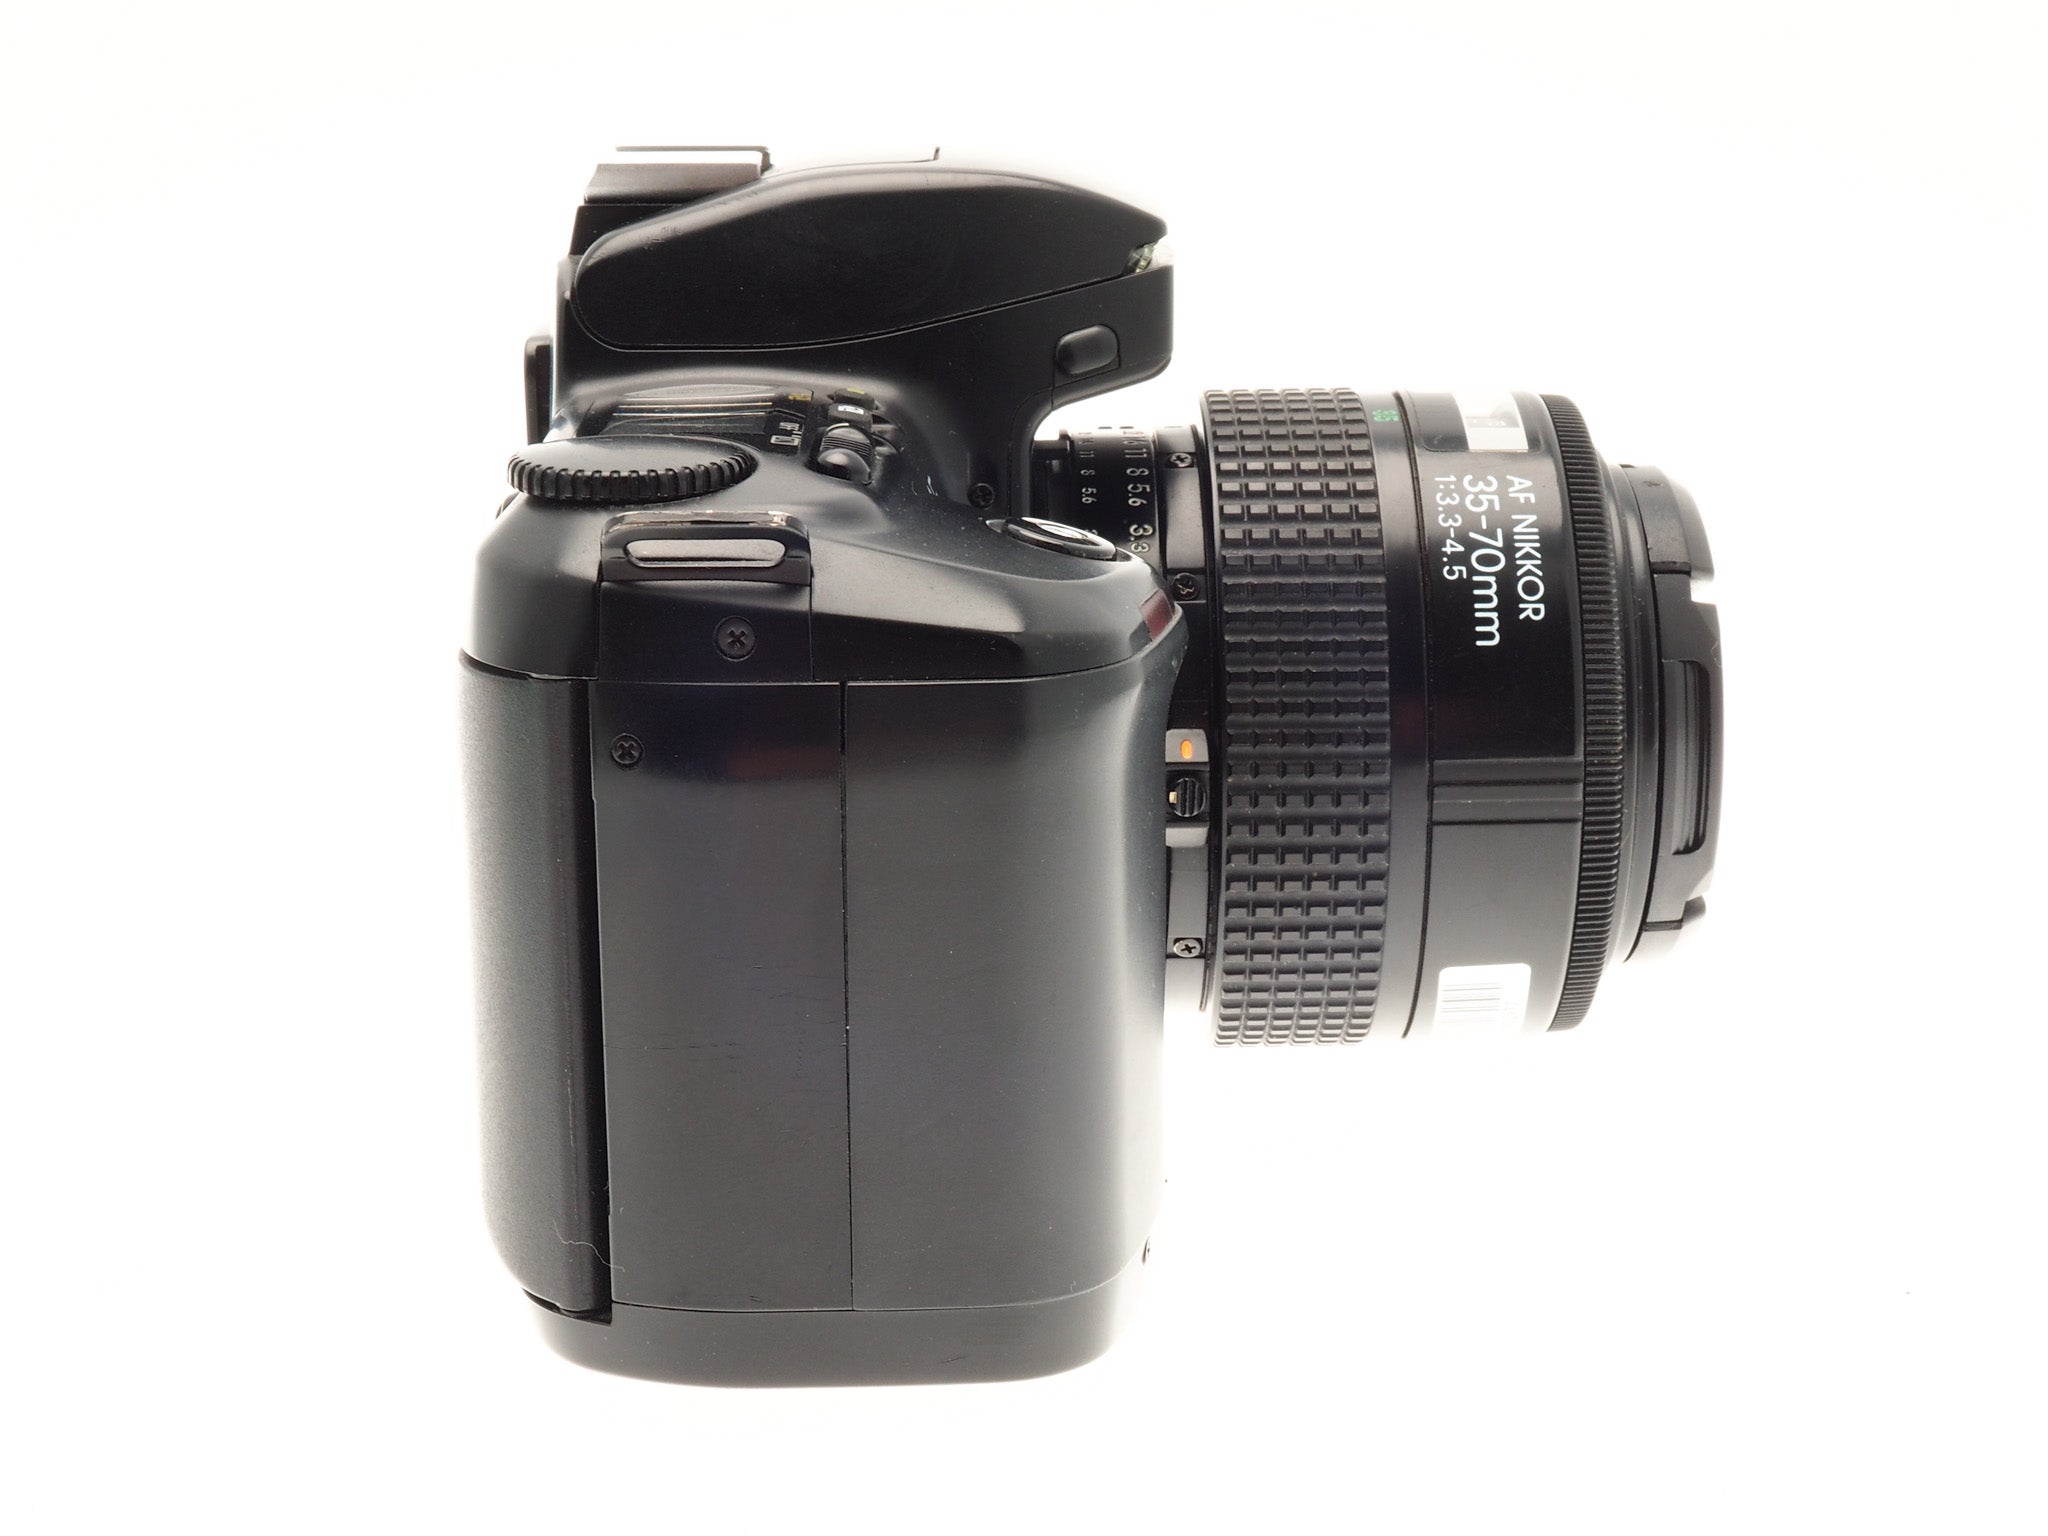 Nikon N6006 - 35mm Film Camera Body - with 6 month warranty